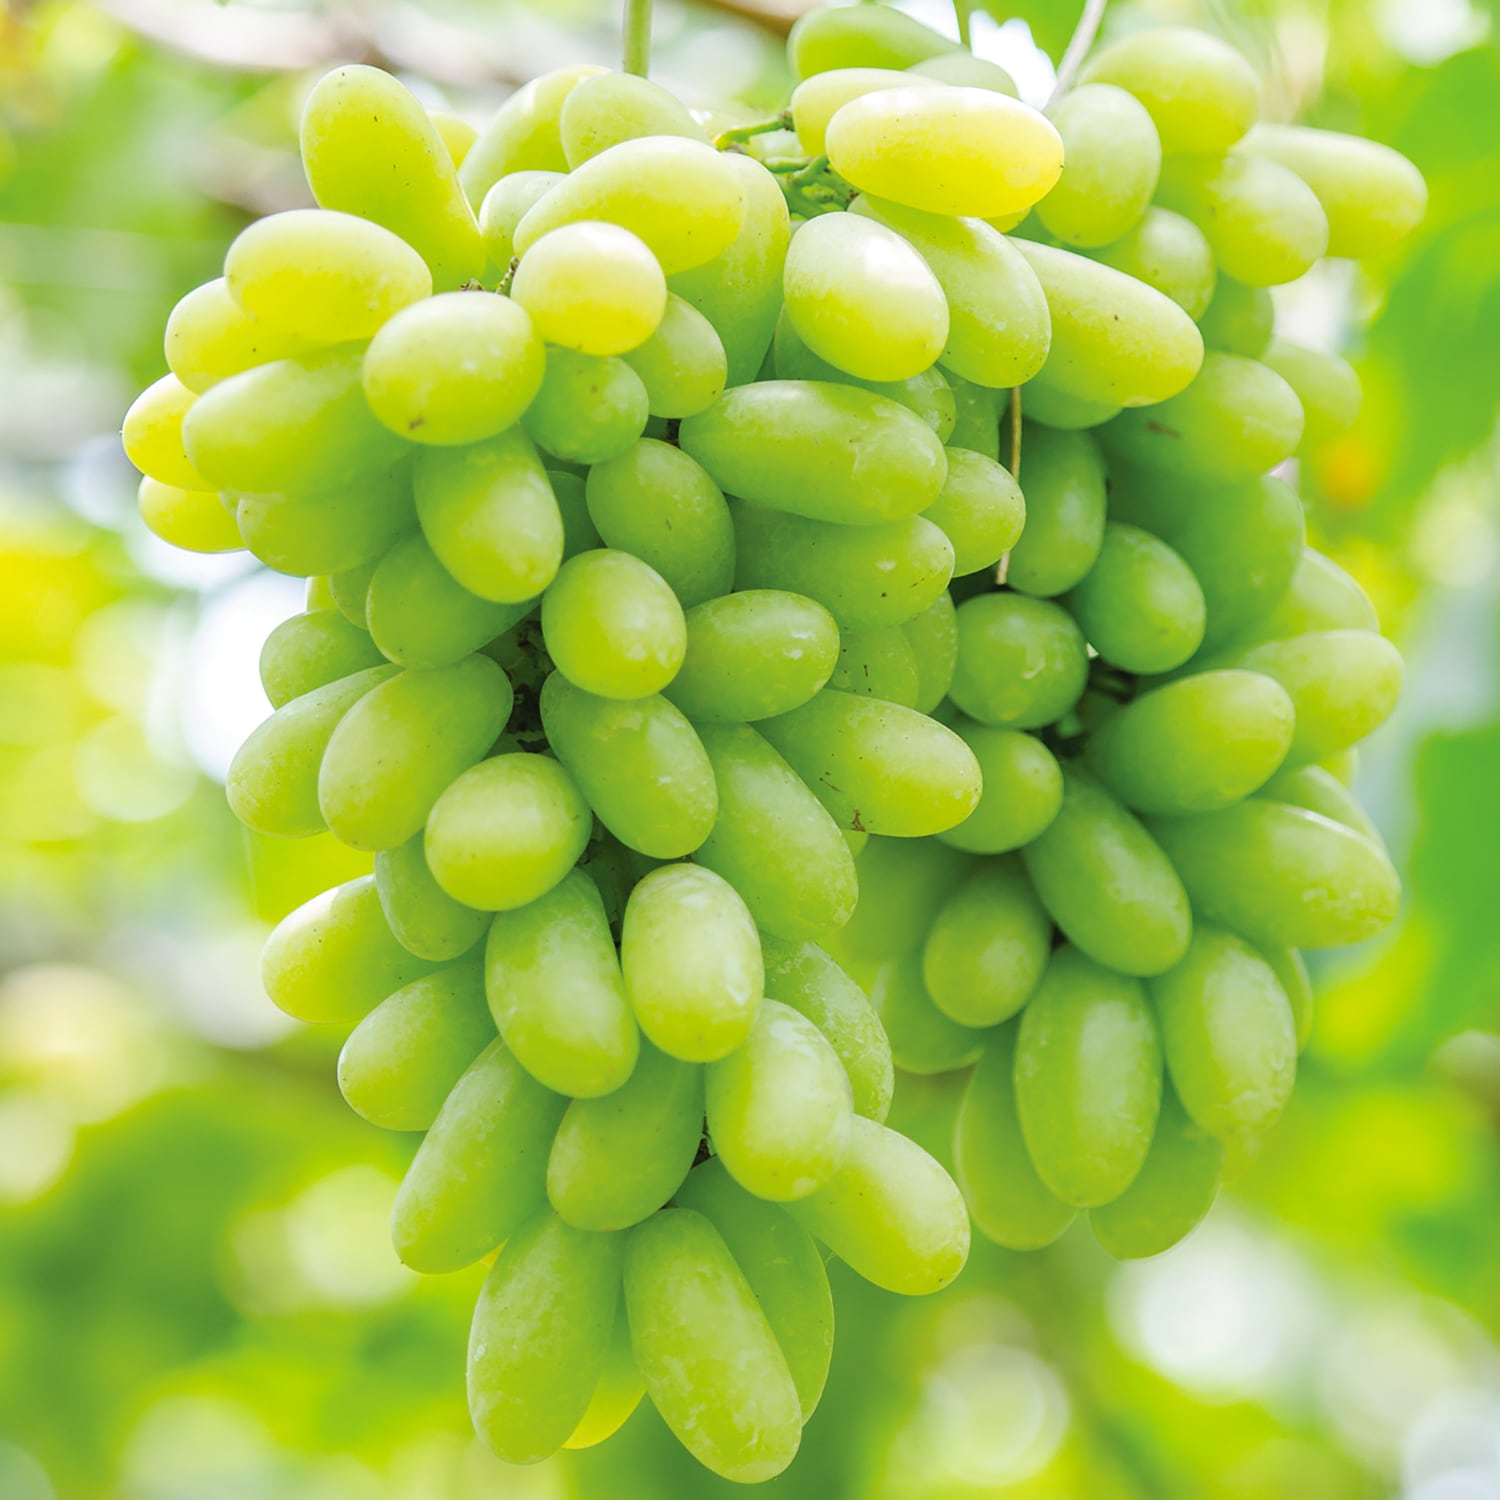 Exrta Large Seedless Green Grapes (1.5 lb-2 lb)